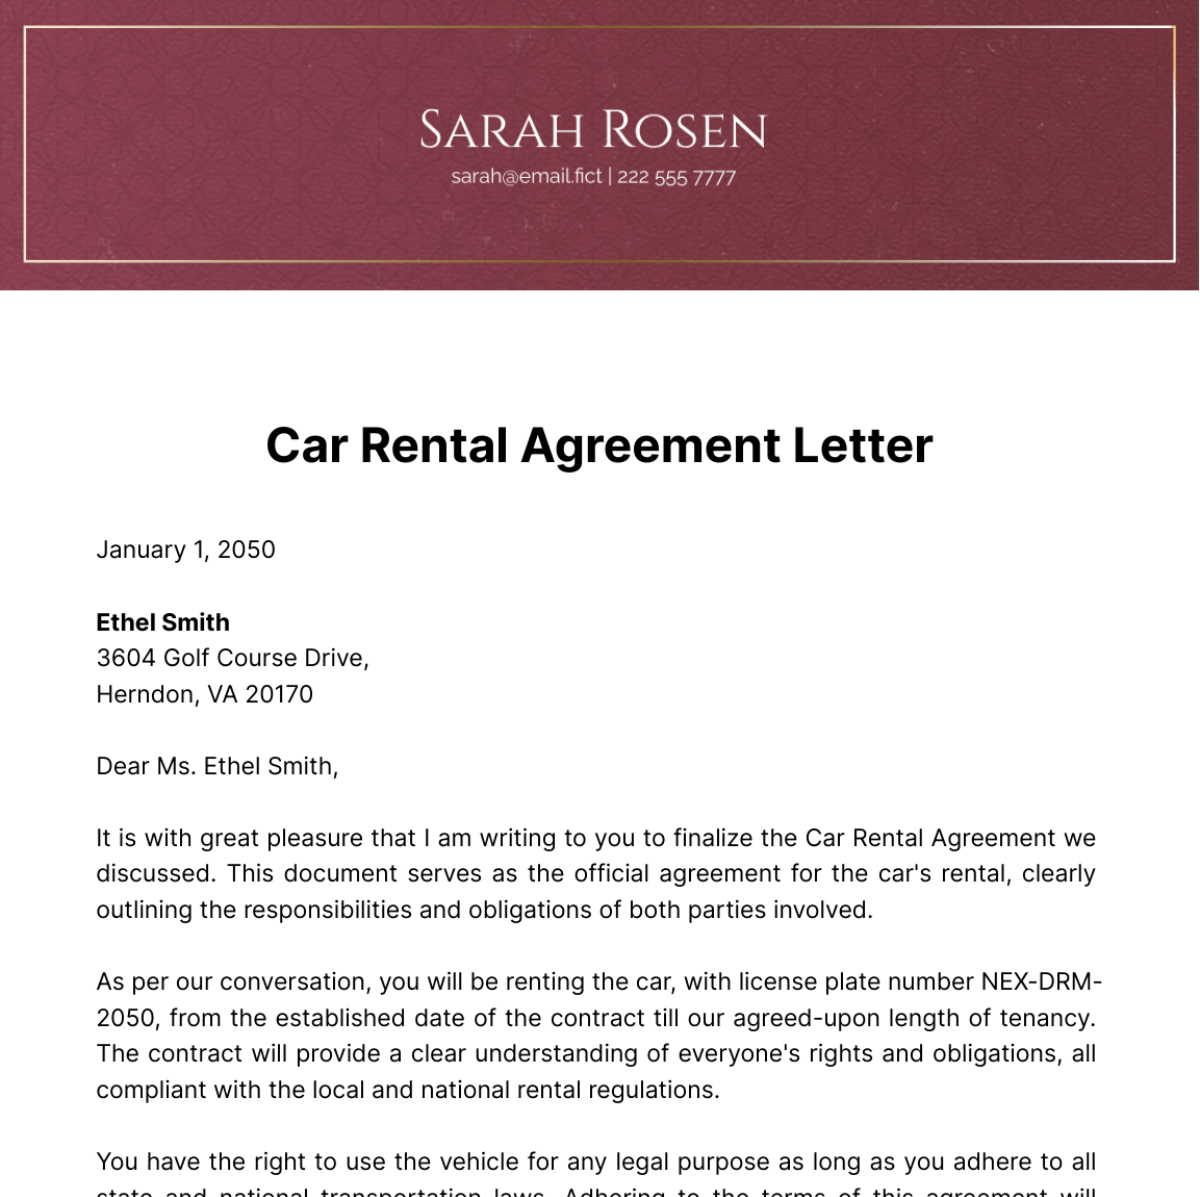 Car Rental Agreement Letter Template